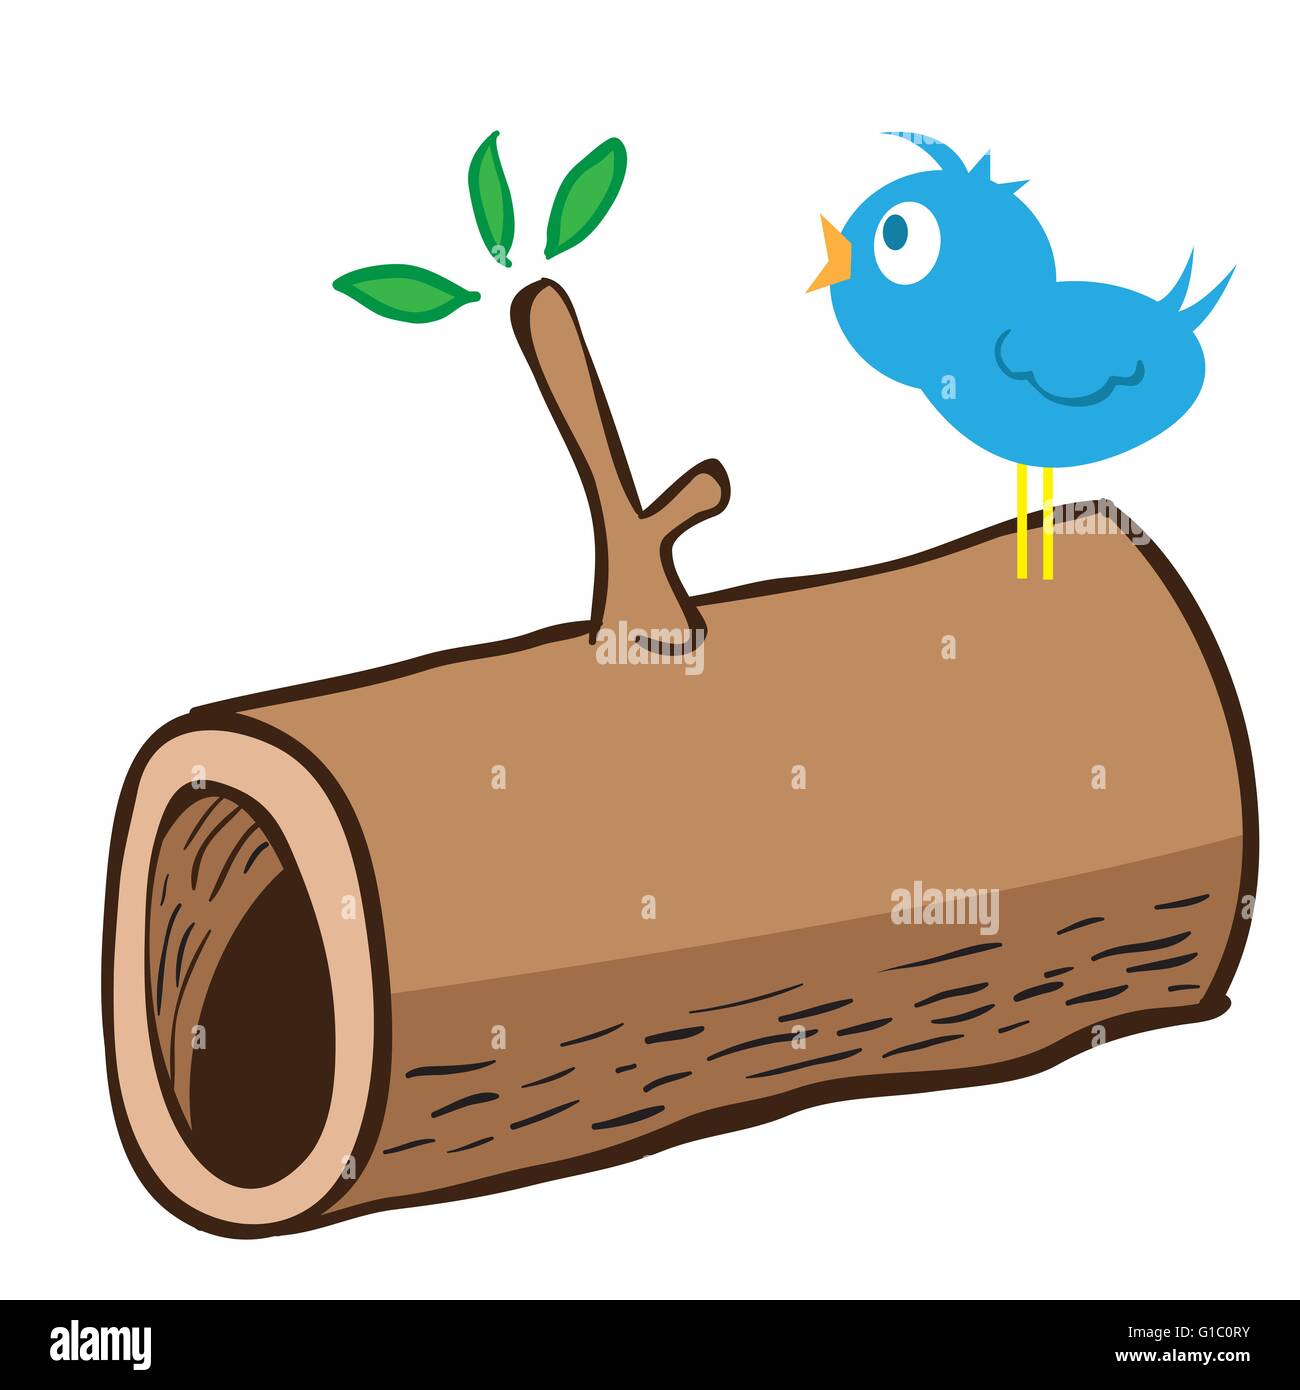 Wood log cartoon Stock Vector Images - Alamy